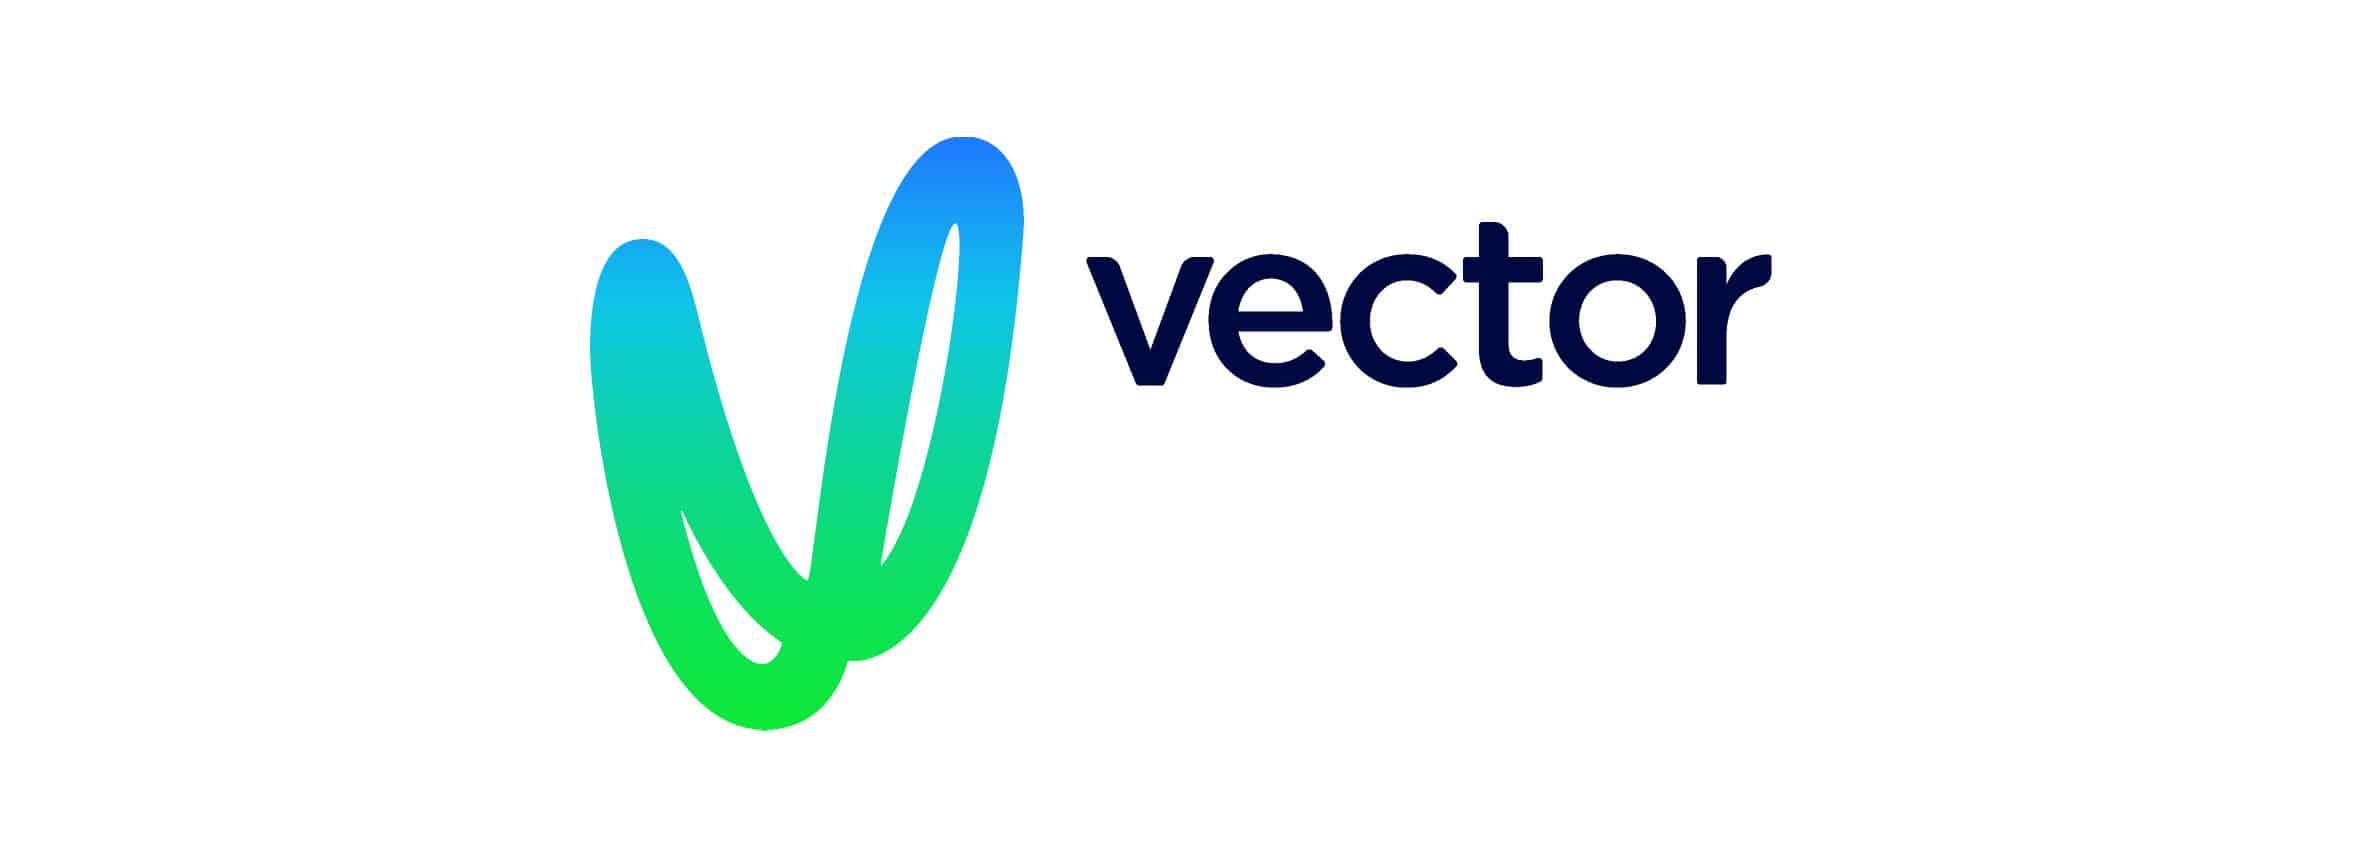 Vector: employee wellbeing strategy